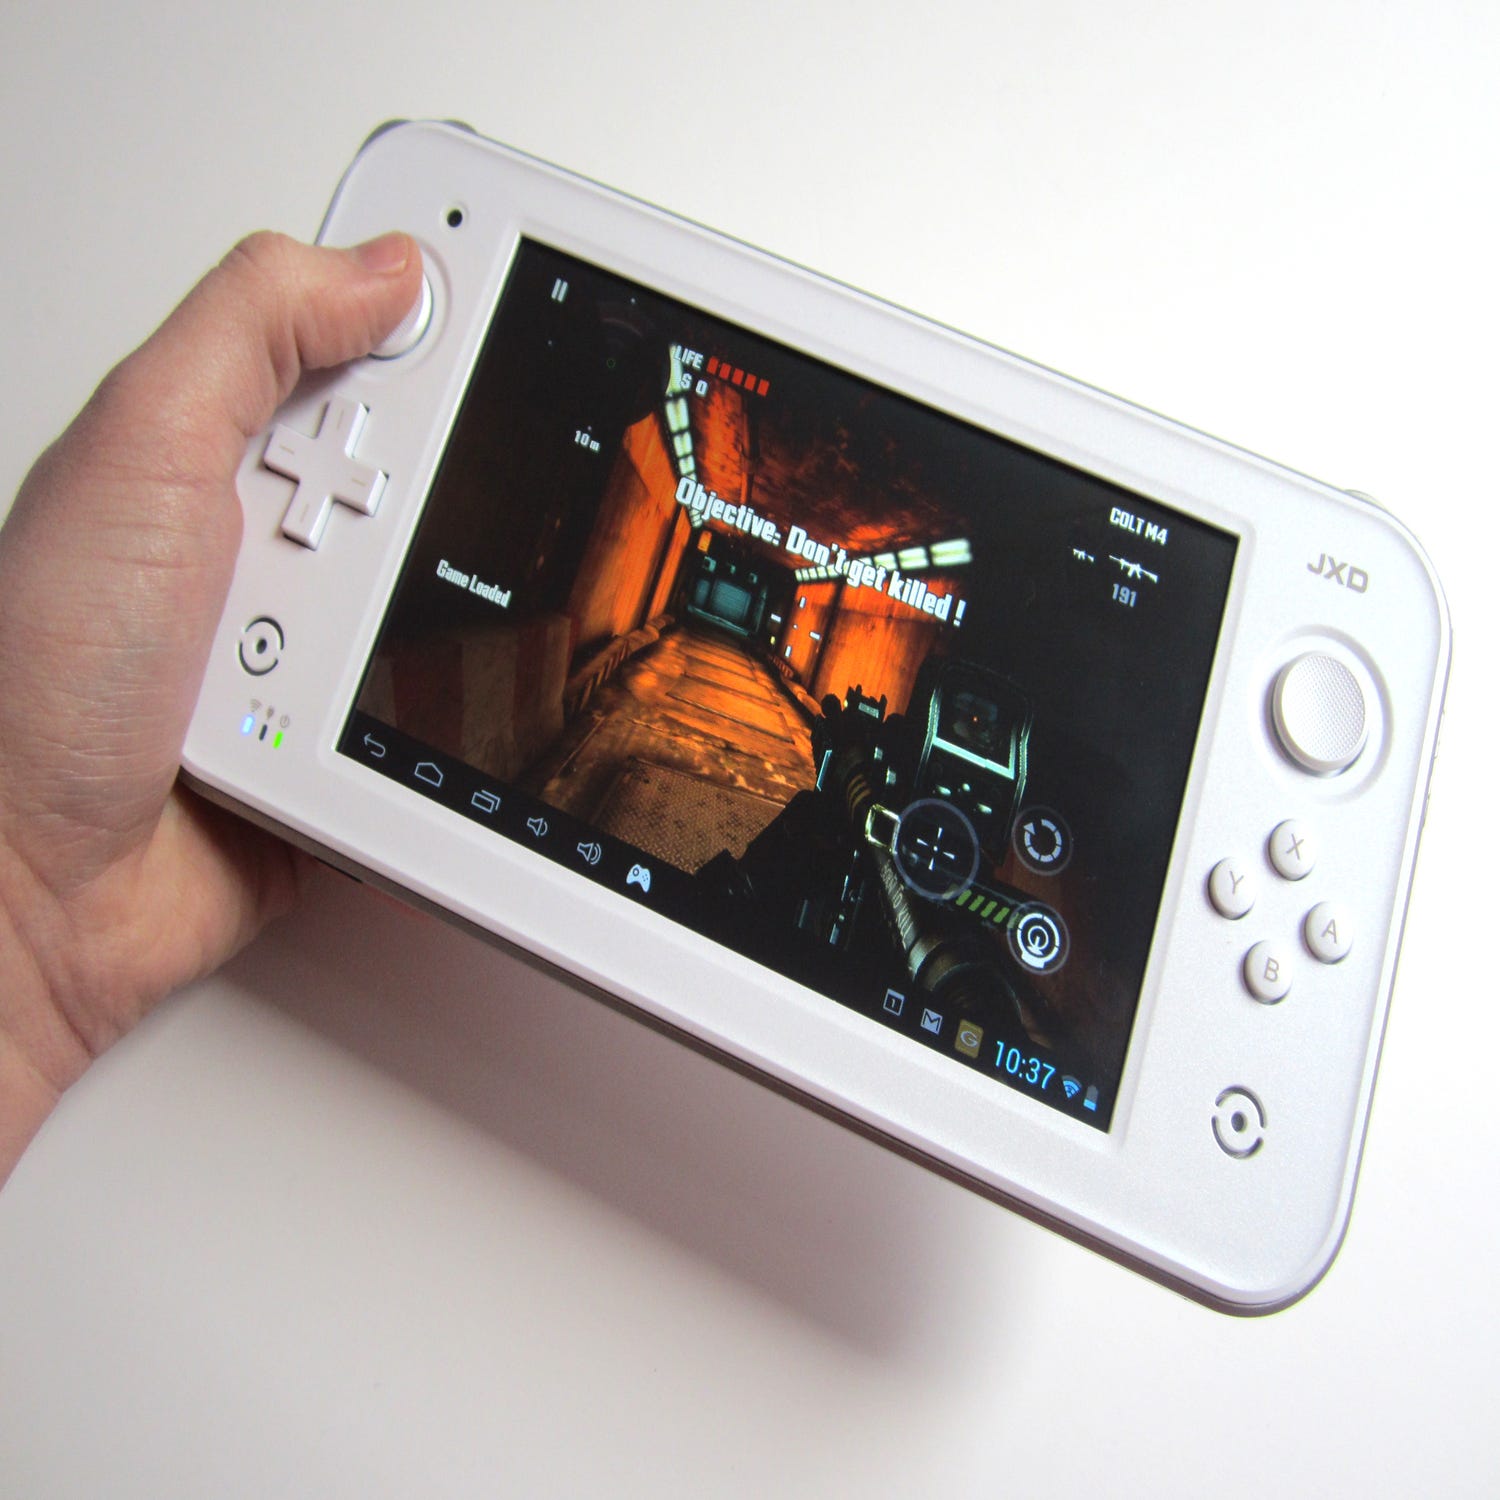 Wii U Emulator - How to Play Wii U Games on PC 